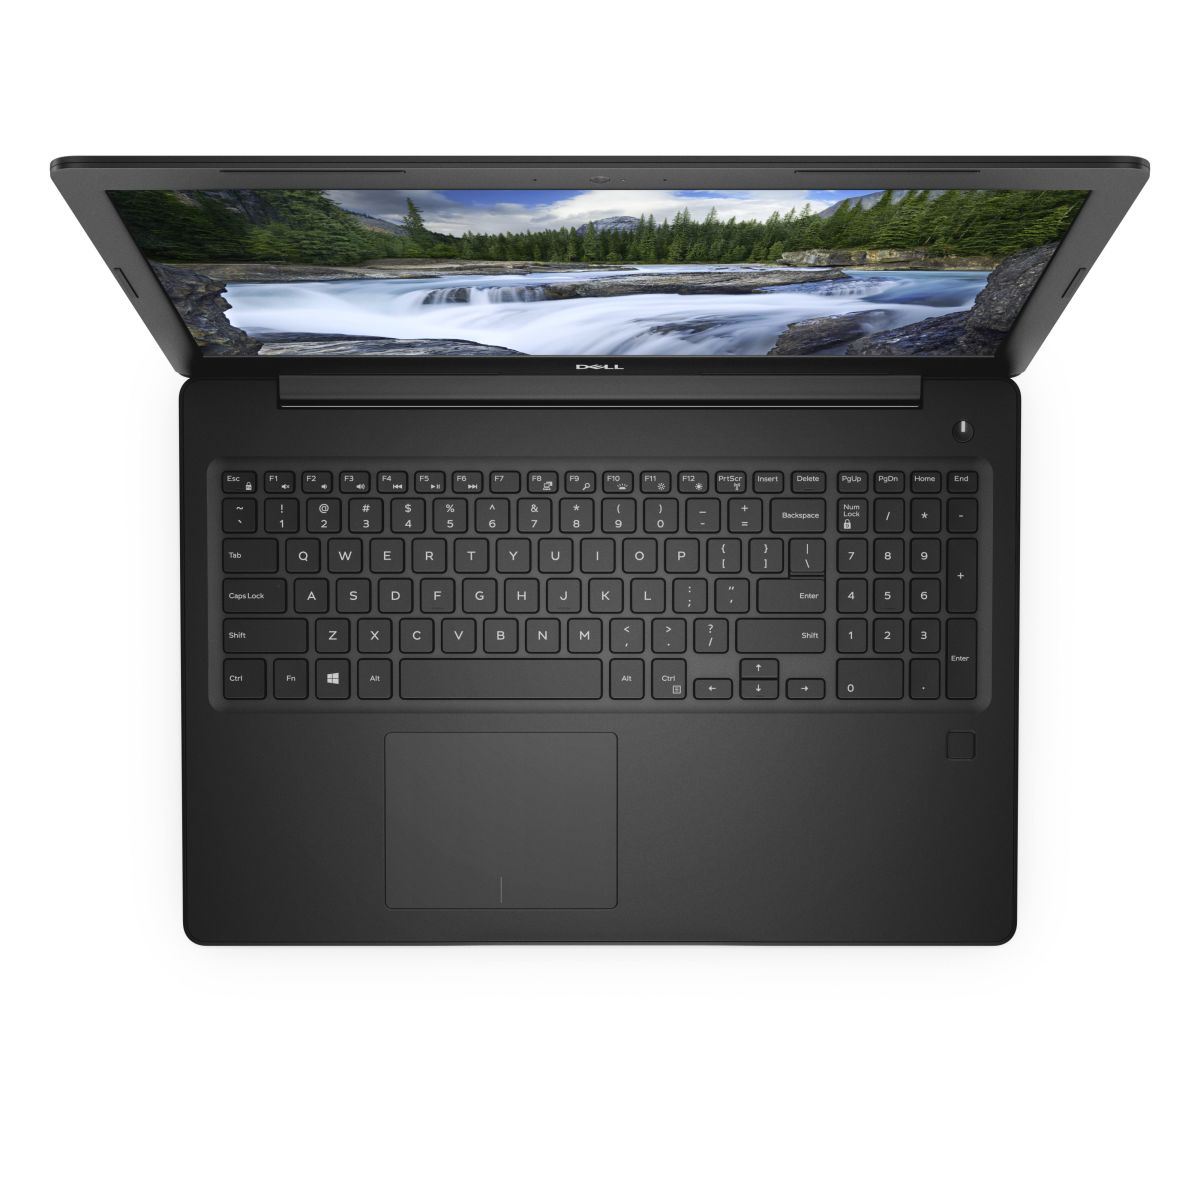 DELL Latitude 3590 - NKDDW laptop specifications